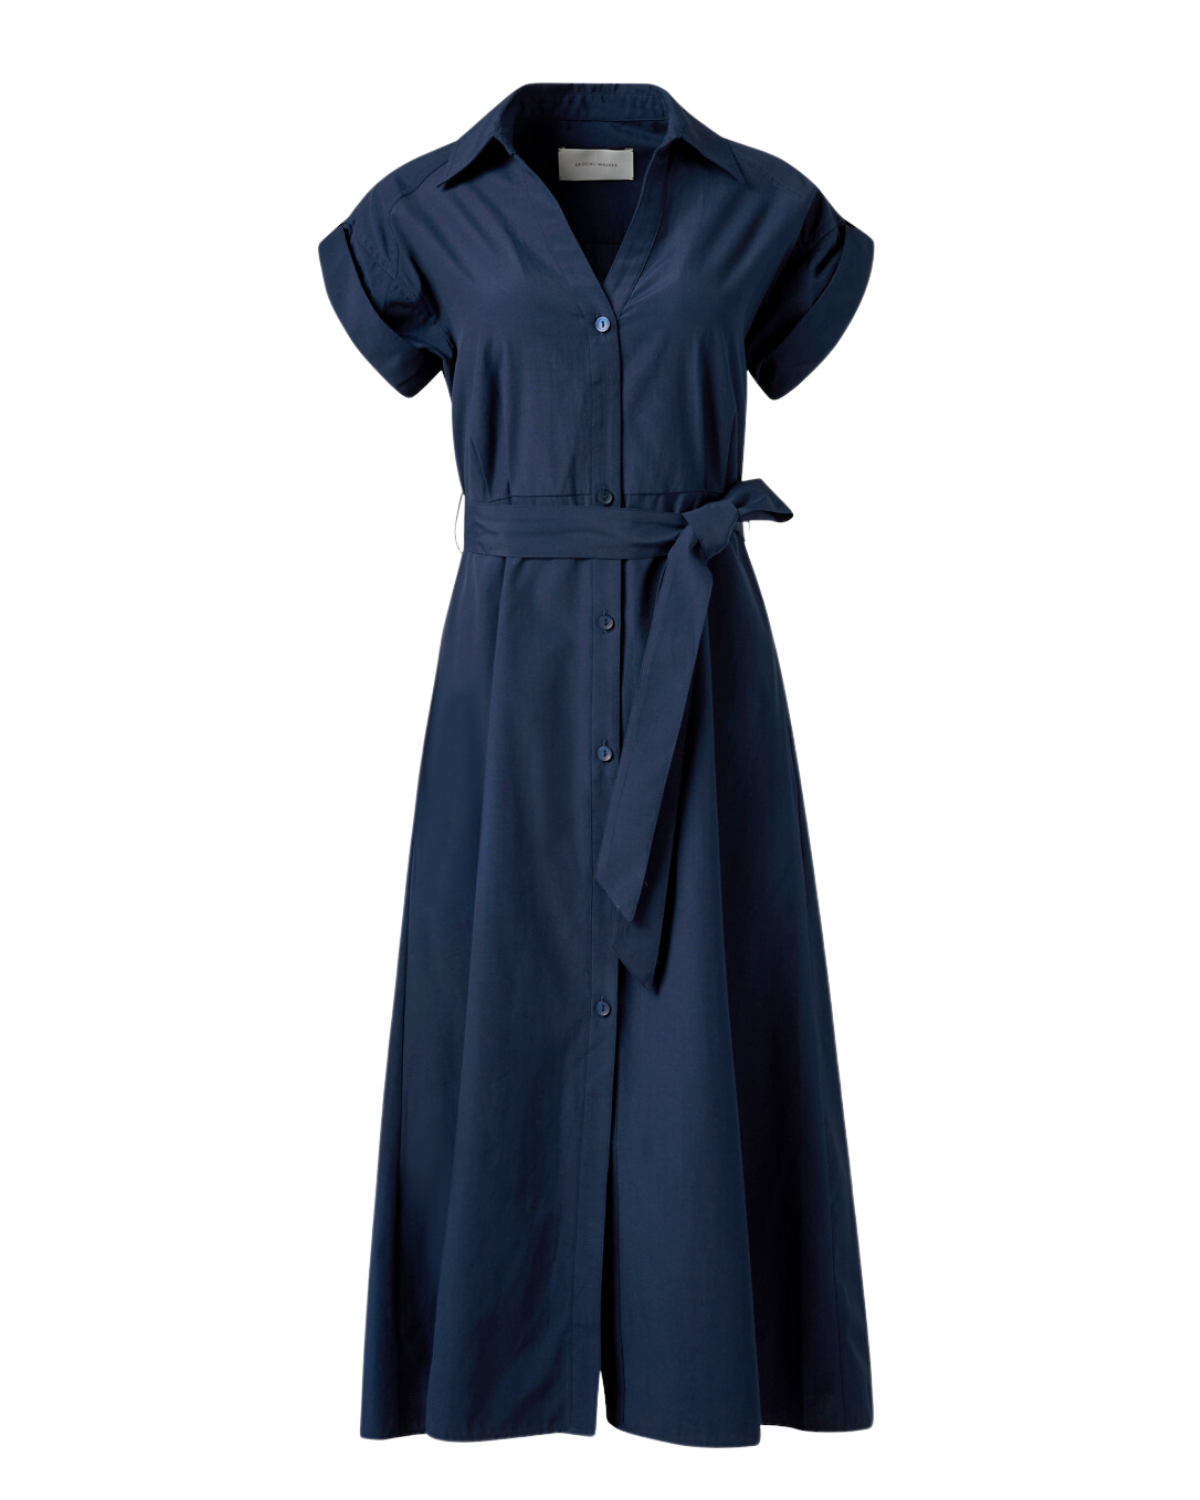 Fia Belted Dress (Navy)